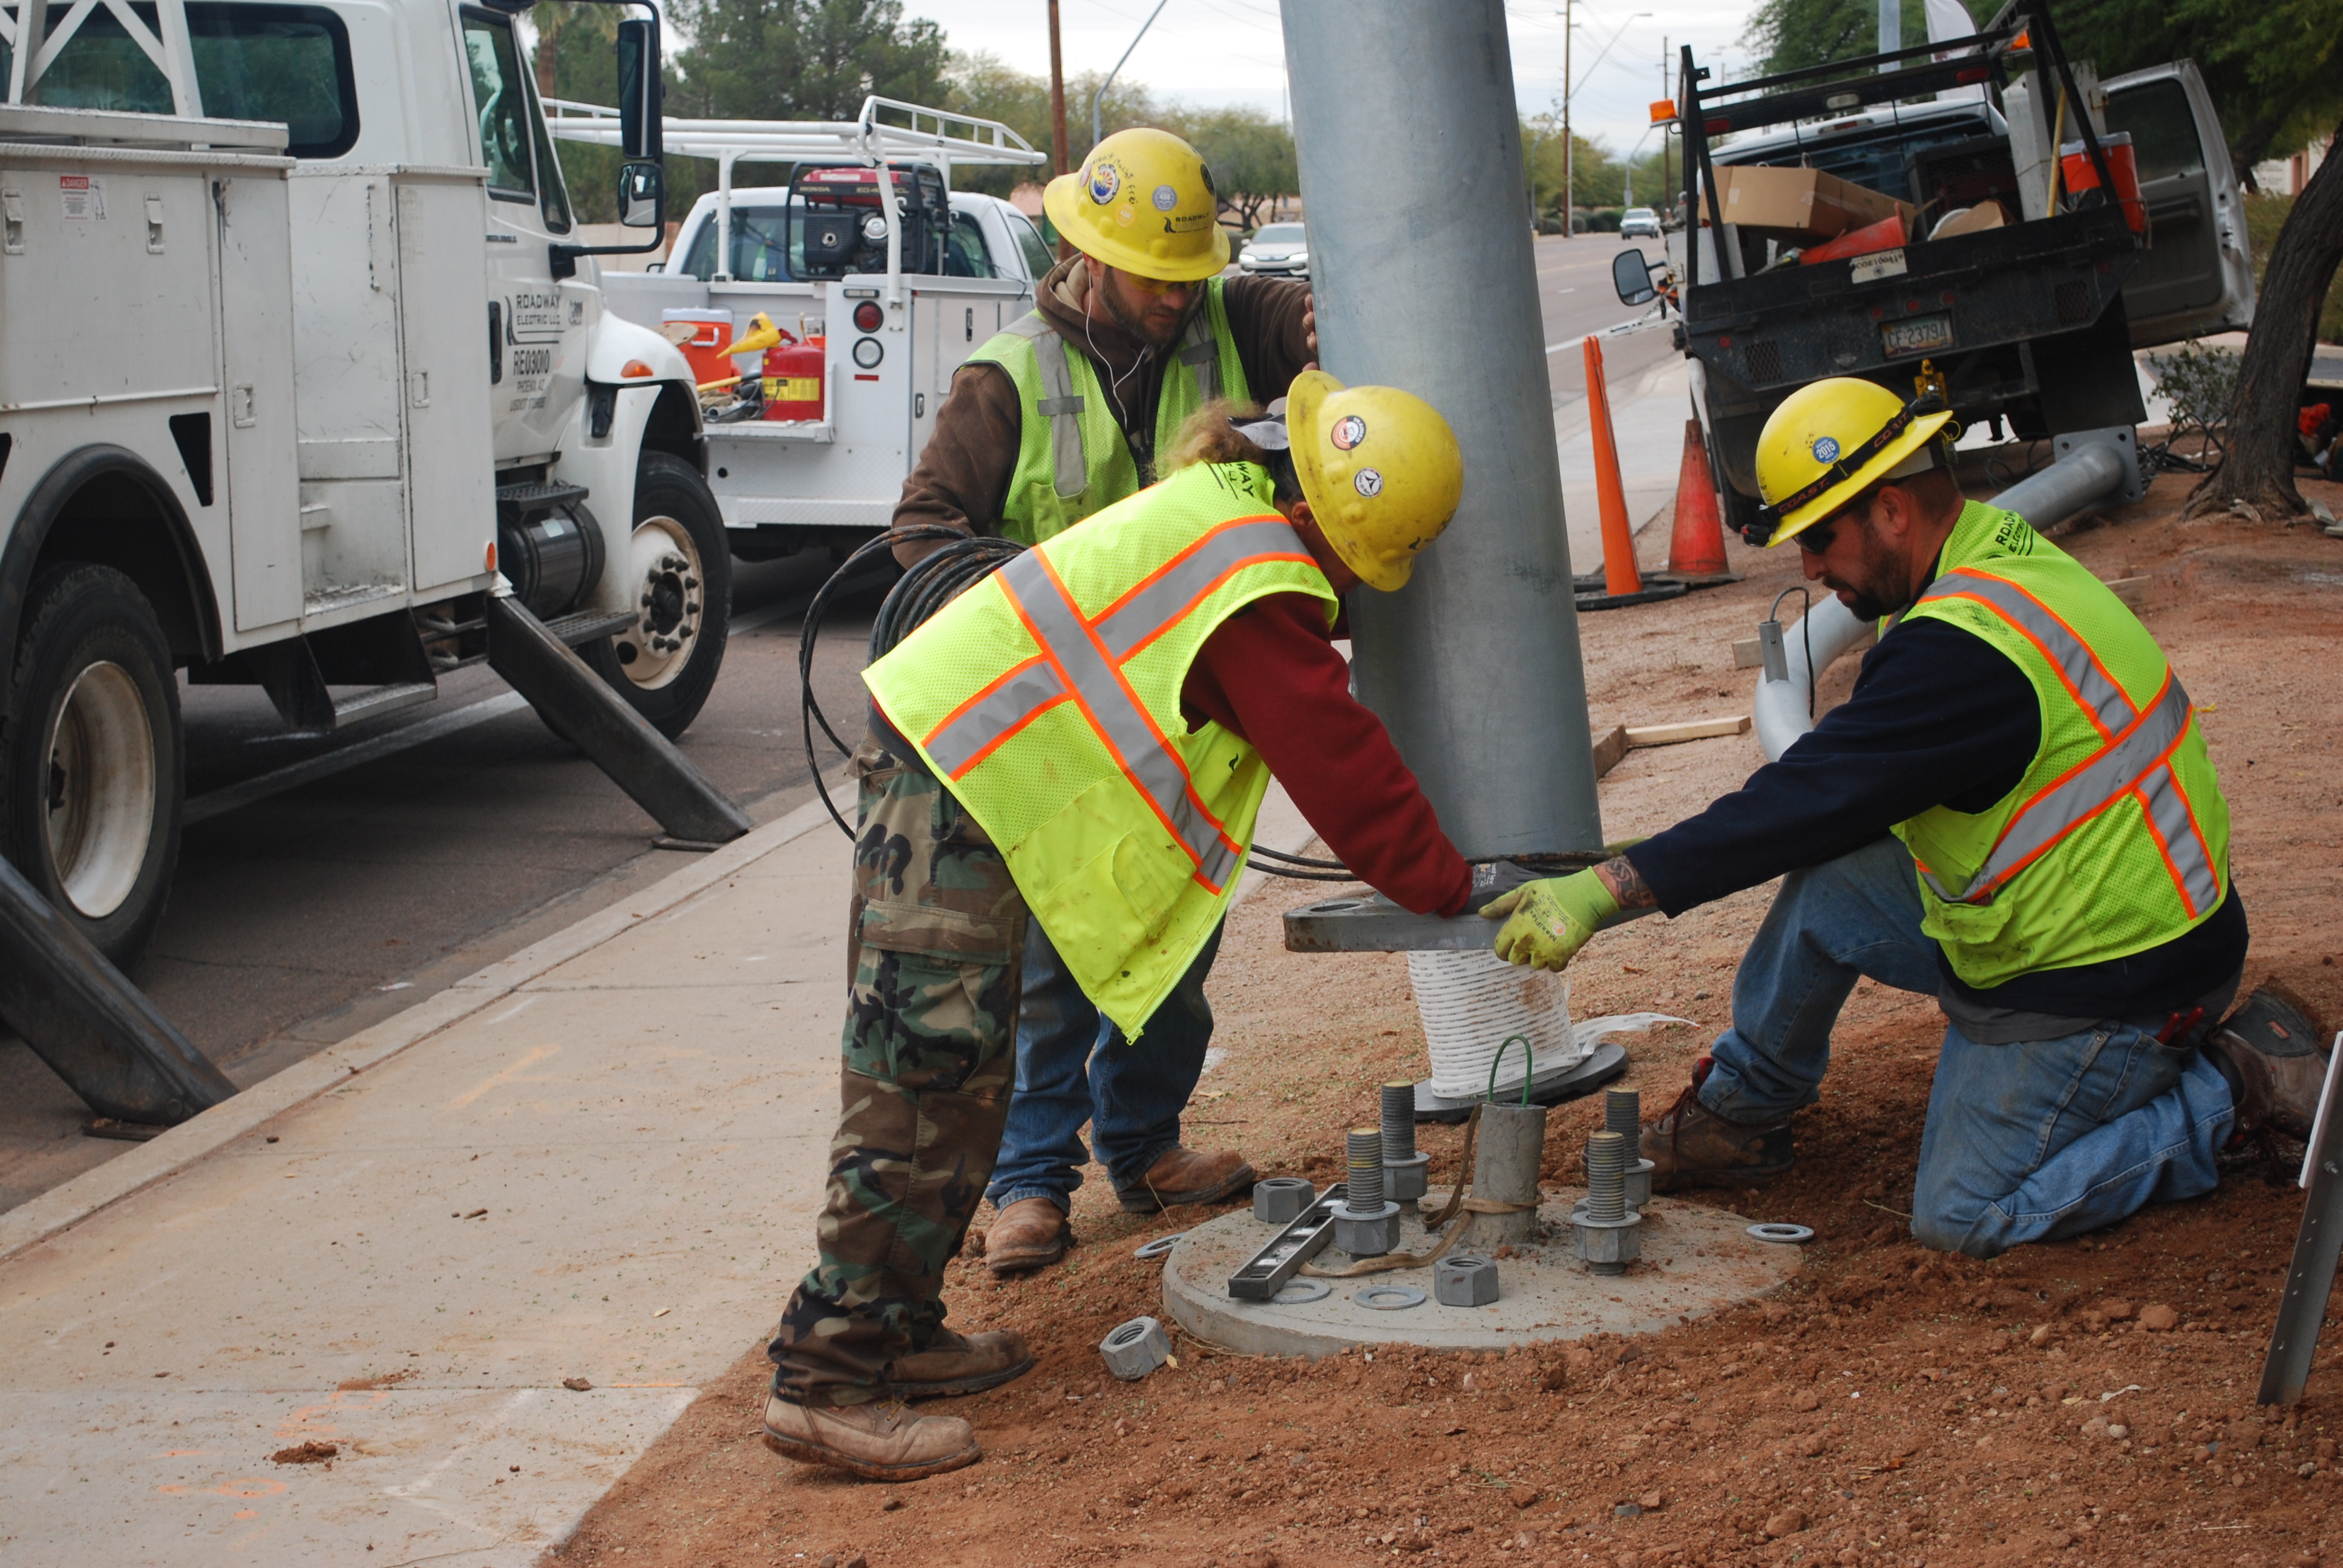 Mesa Traffic Signal Maintenance